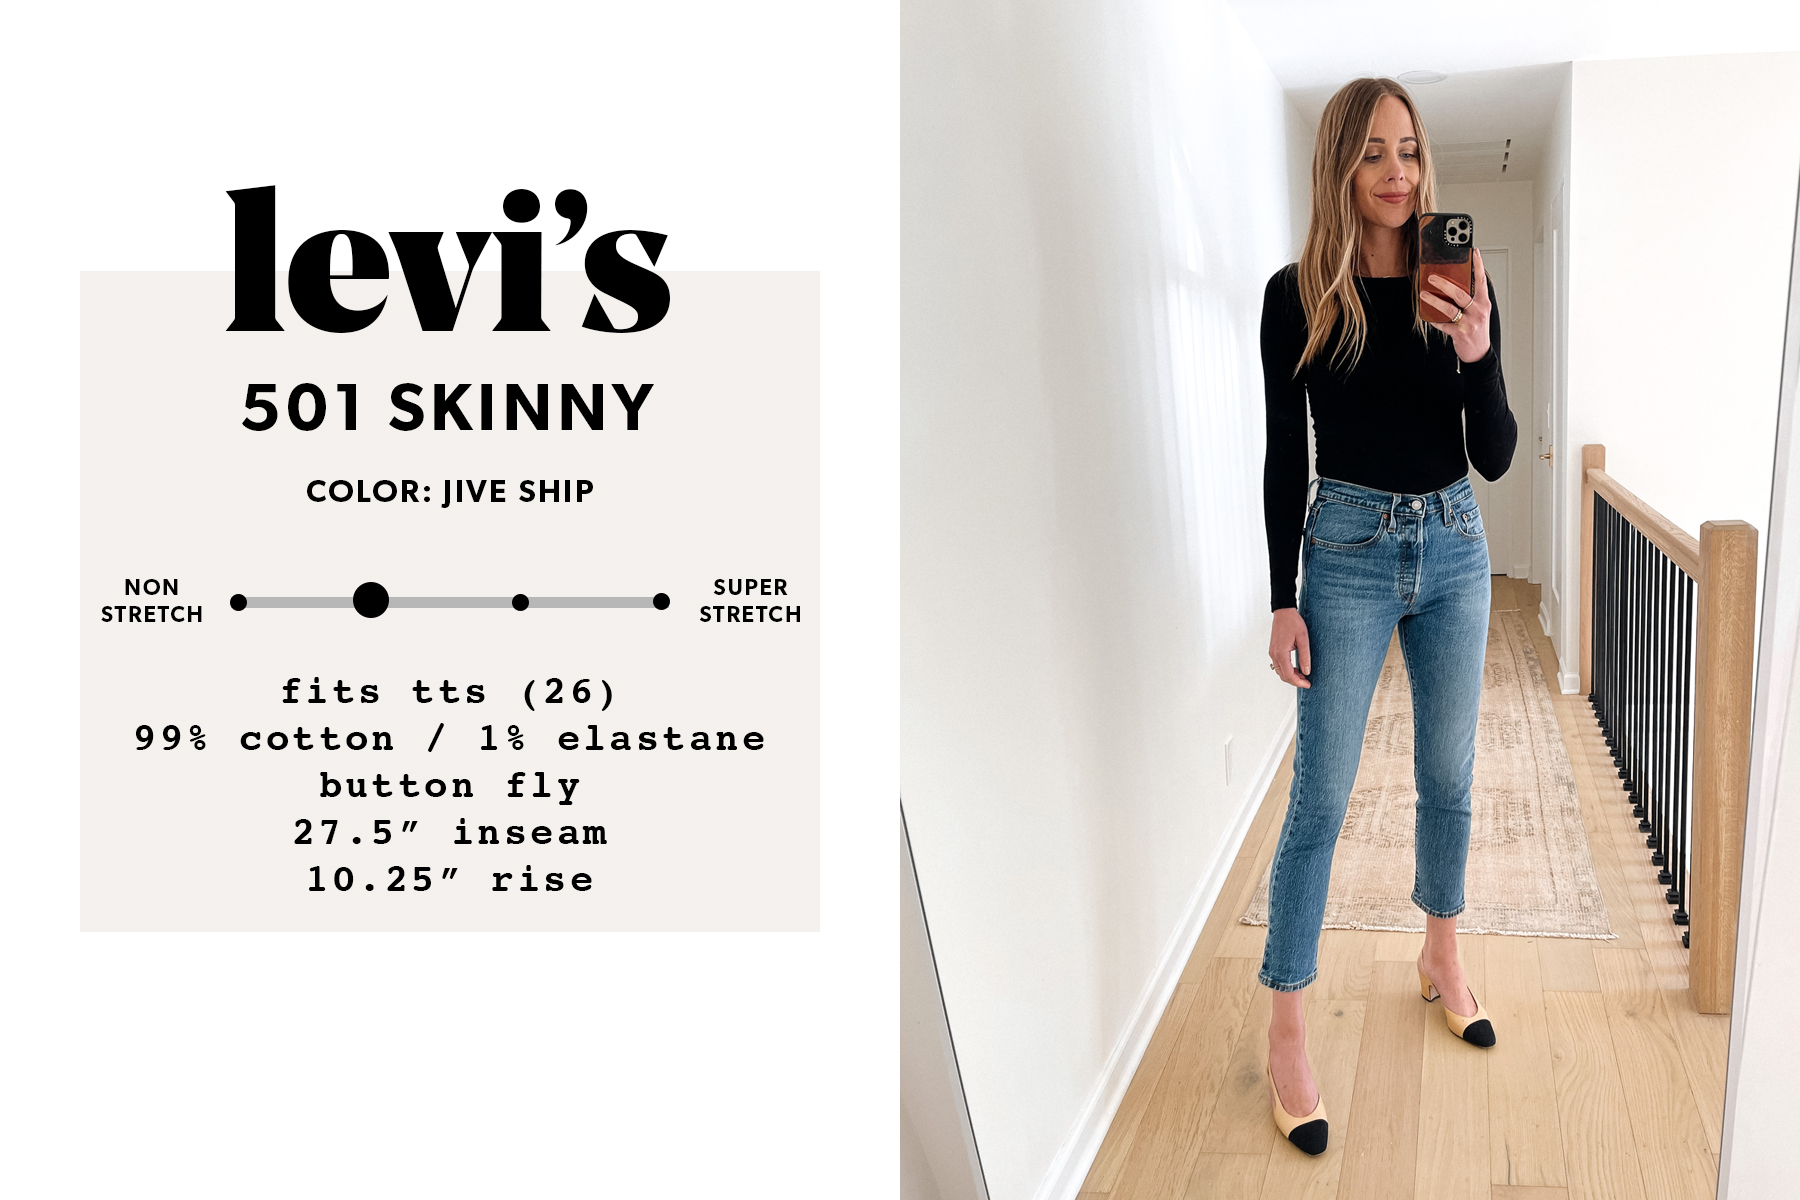 Fysik udstilling krybdyr The Complete Guide to Buying Levi's Jeans for Women - Fashion Jackson